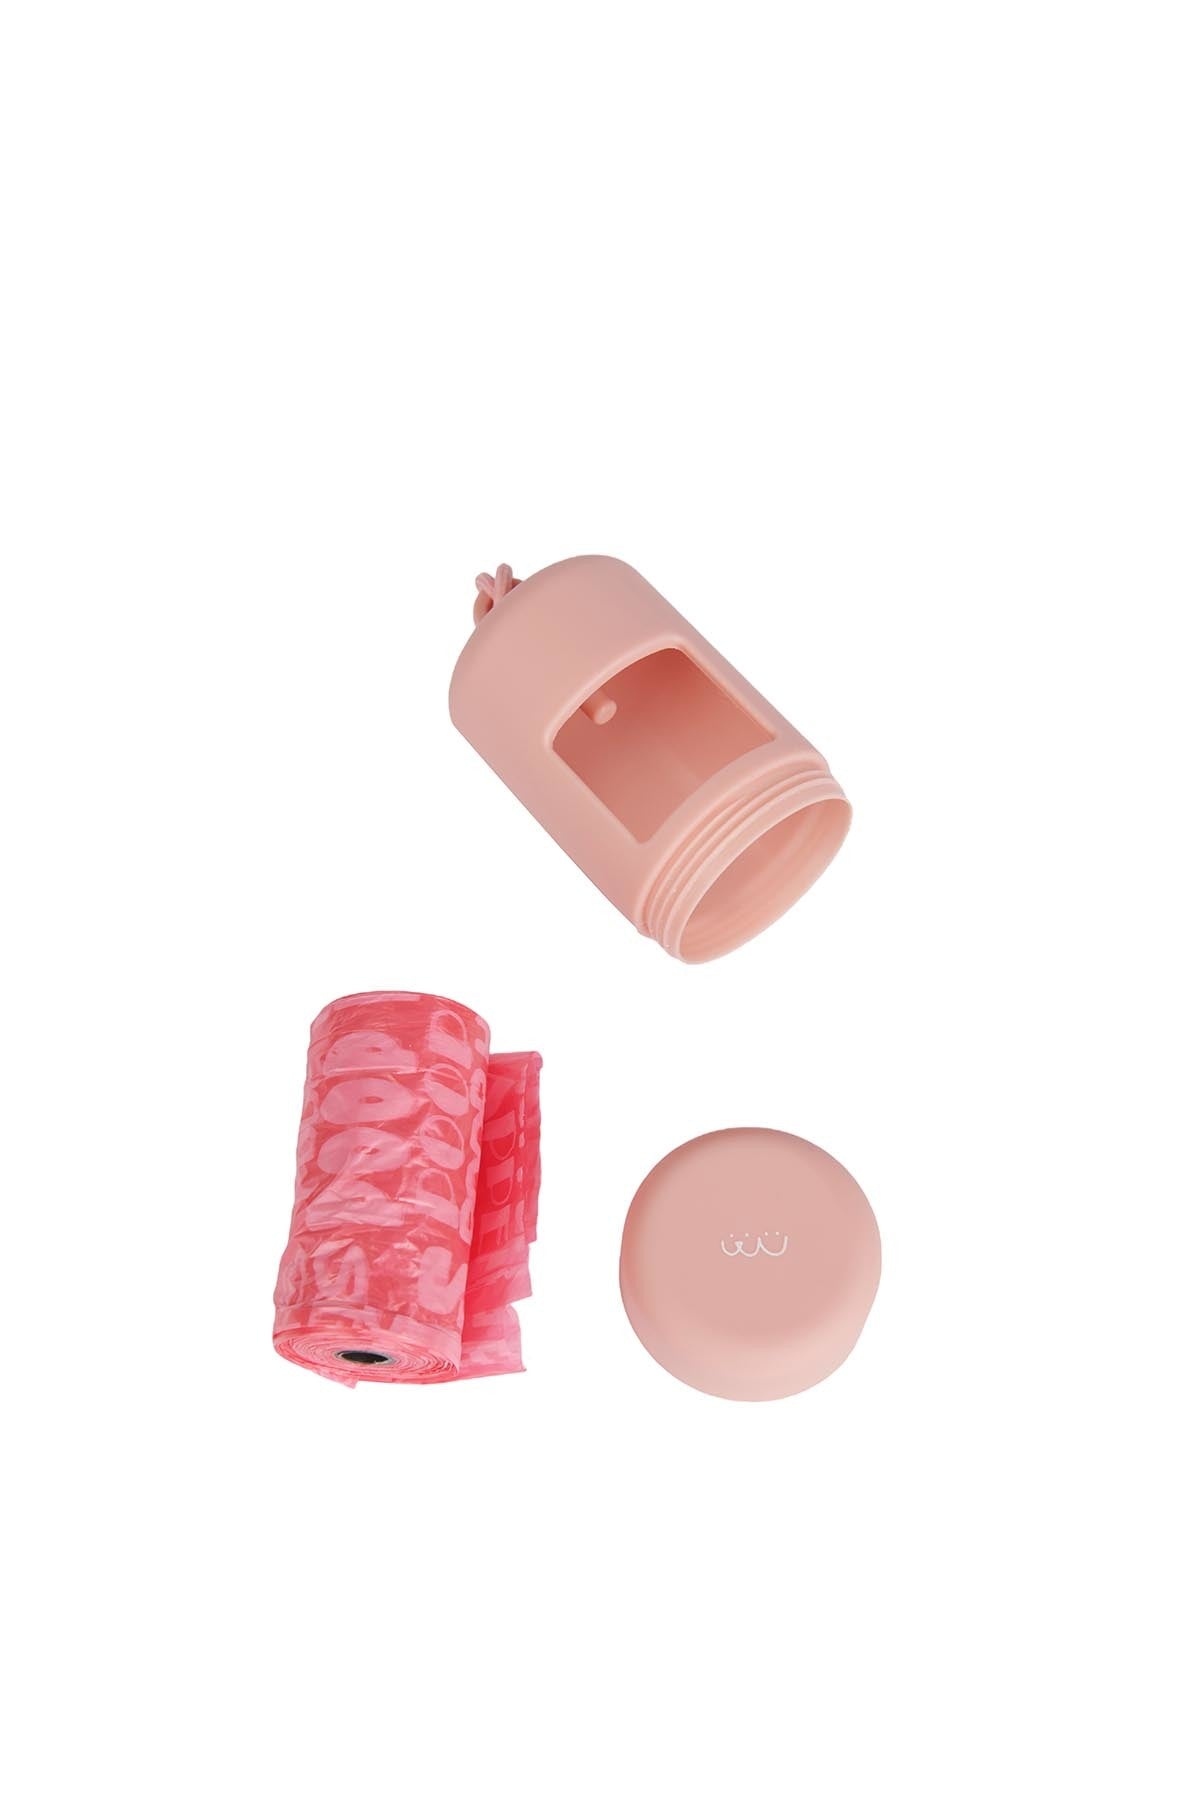 Boyun Tasma Seti - Peach Pink